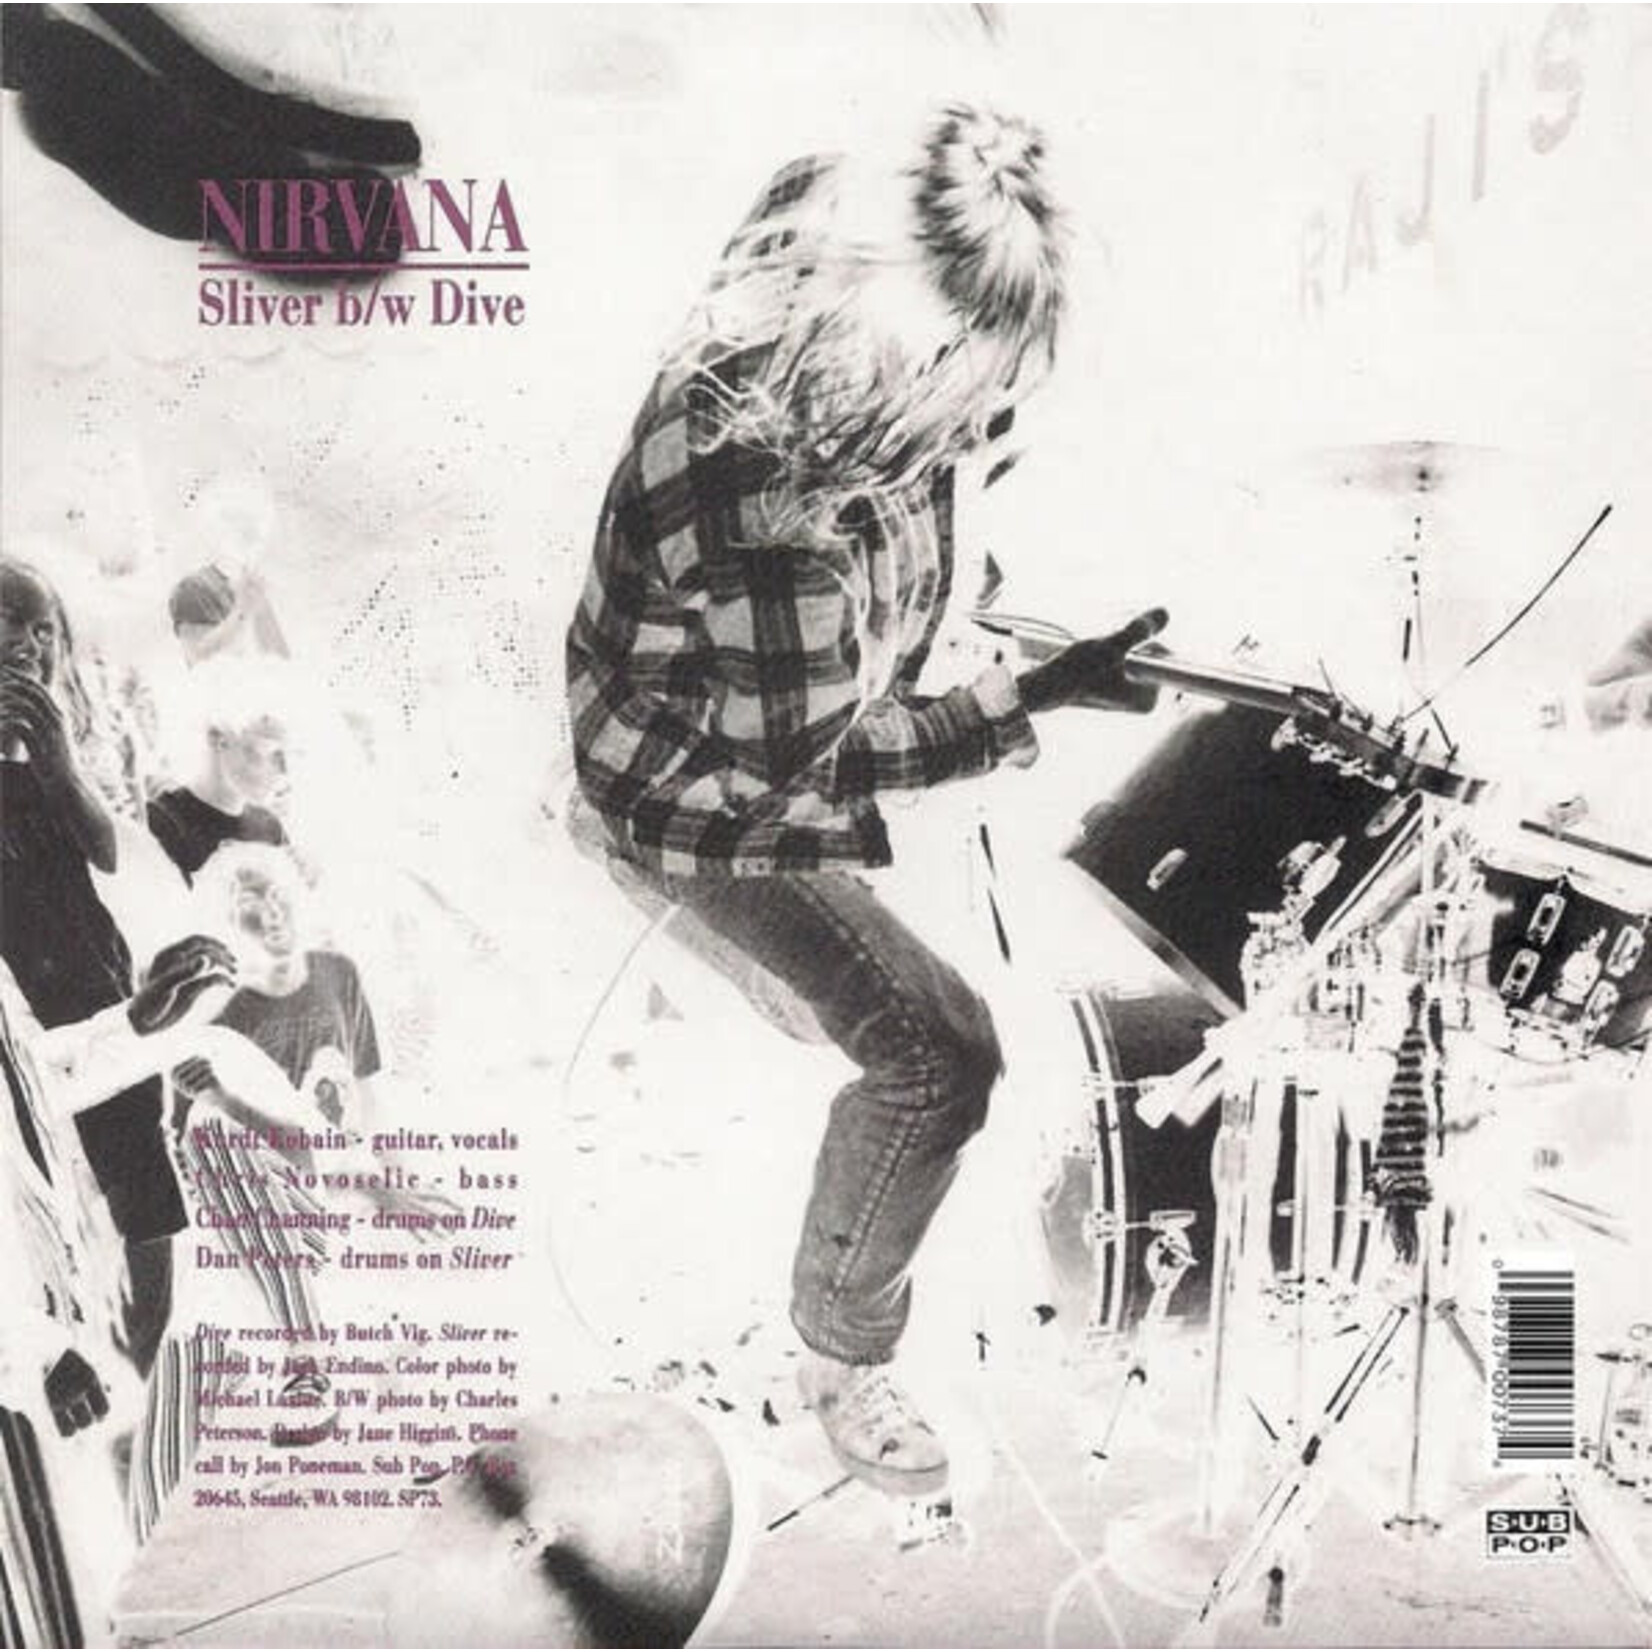 Sub Pop Nirvana - Sliver b/w Dive (7")